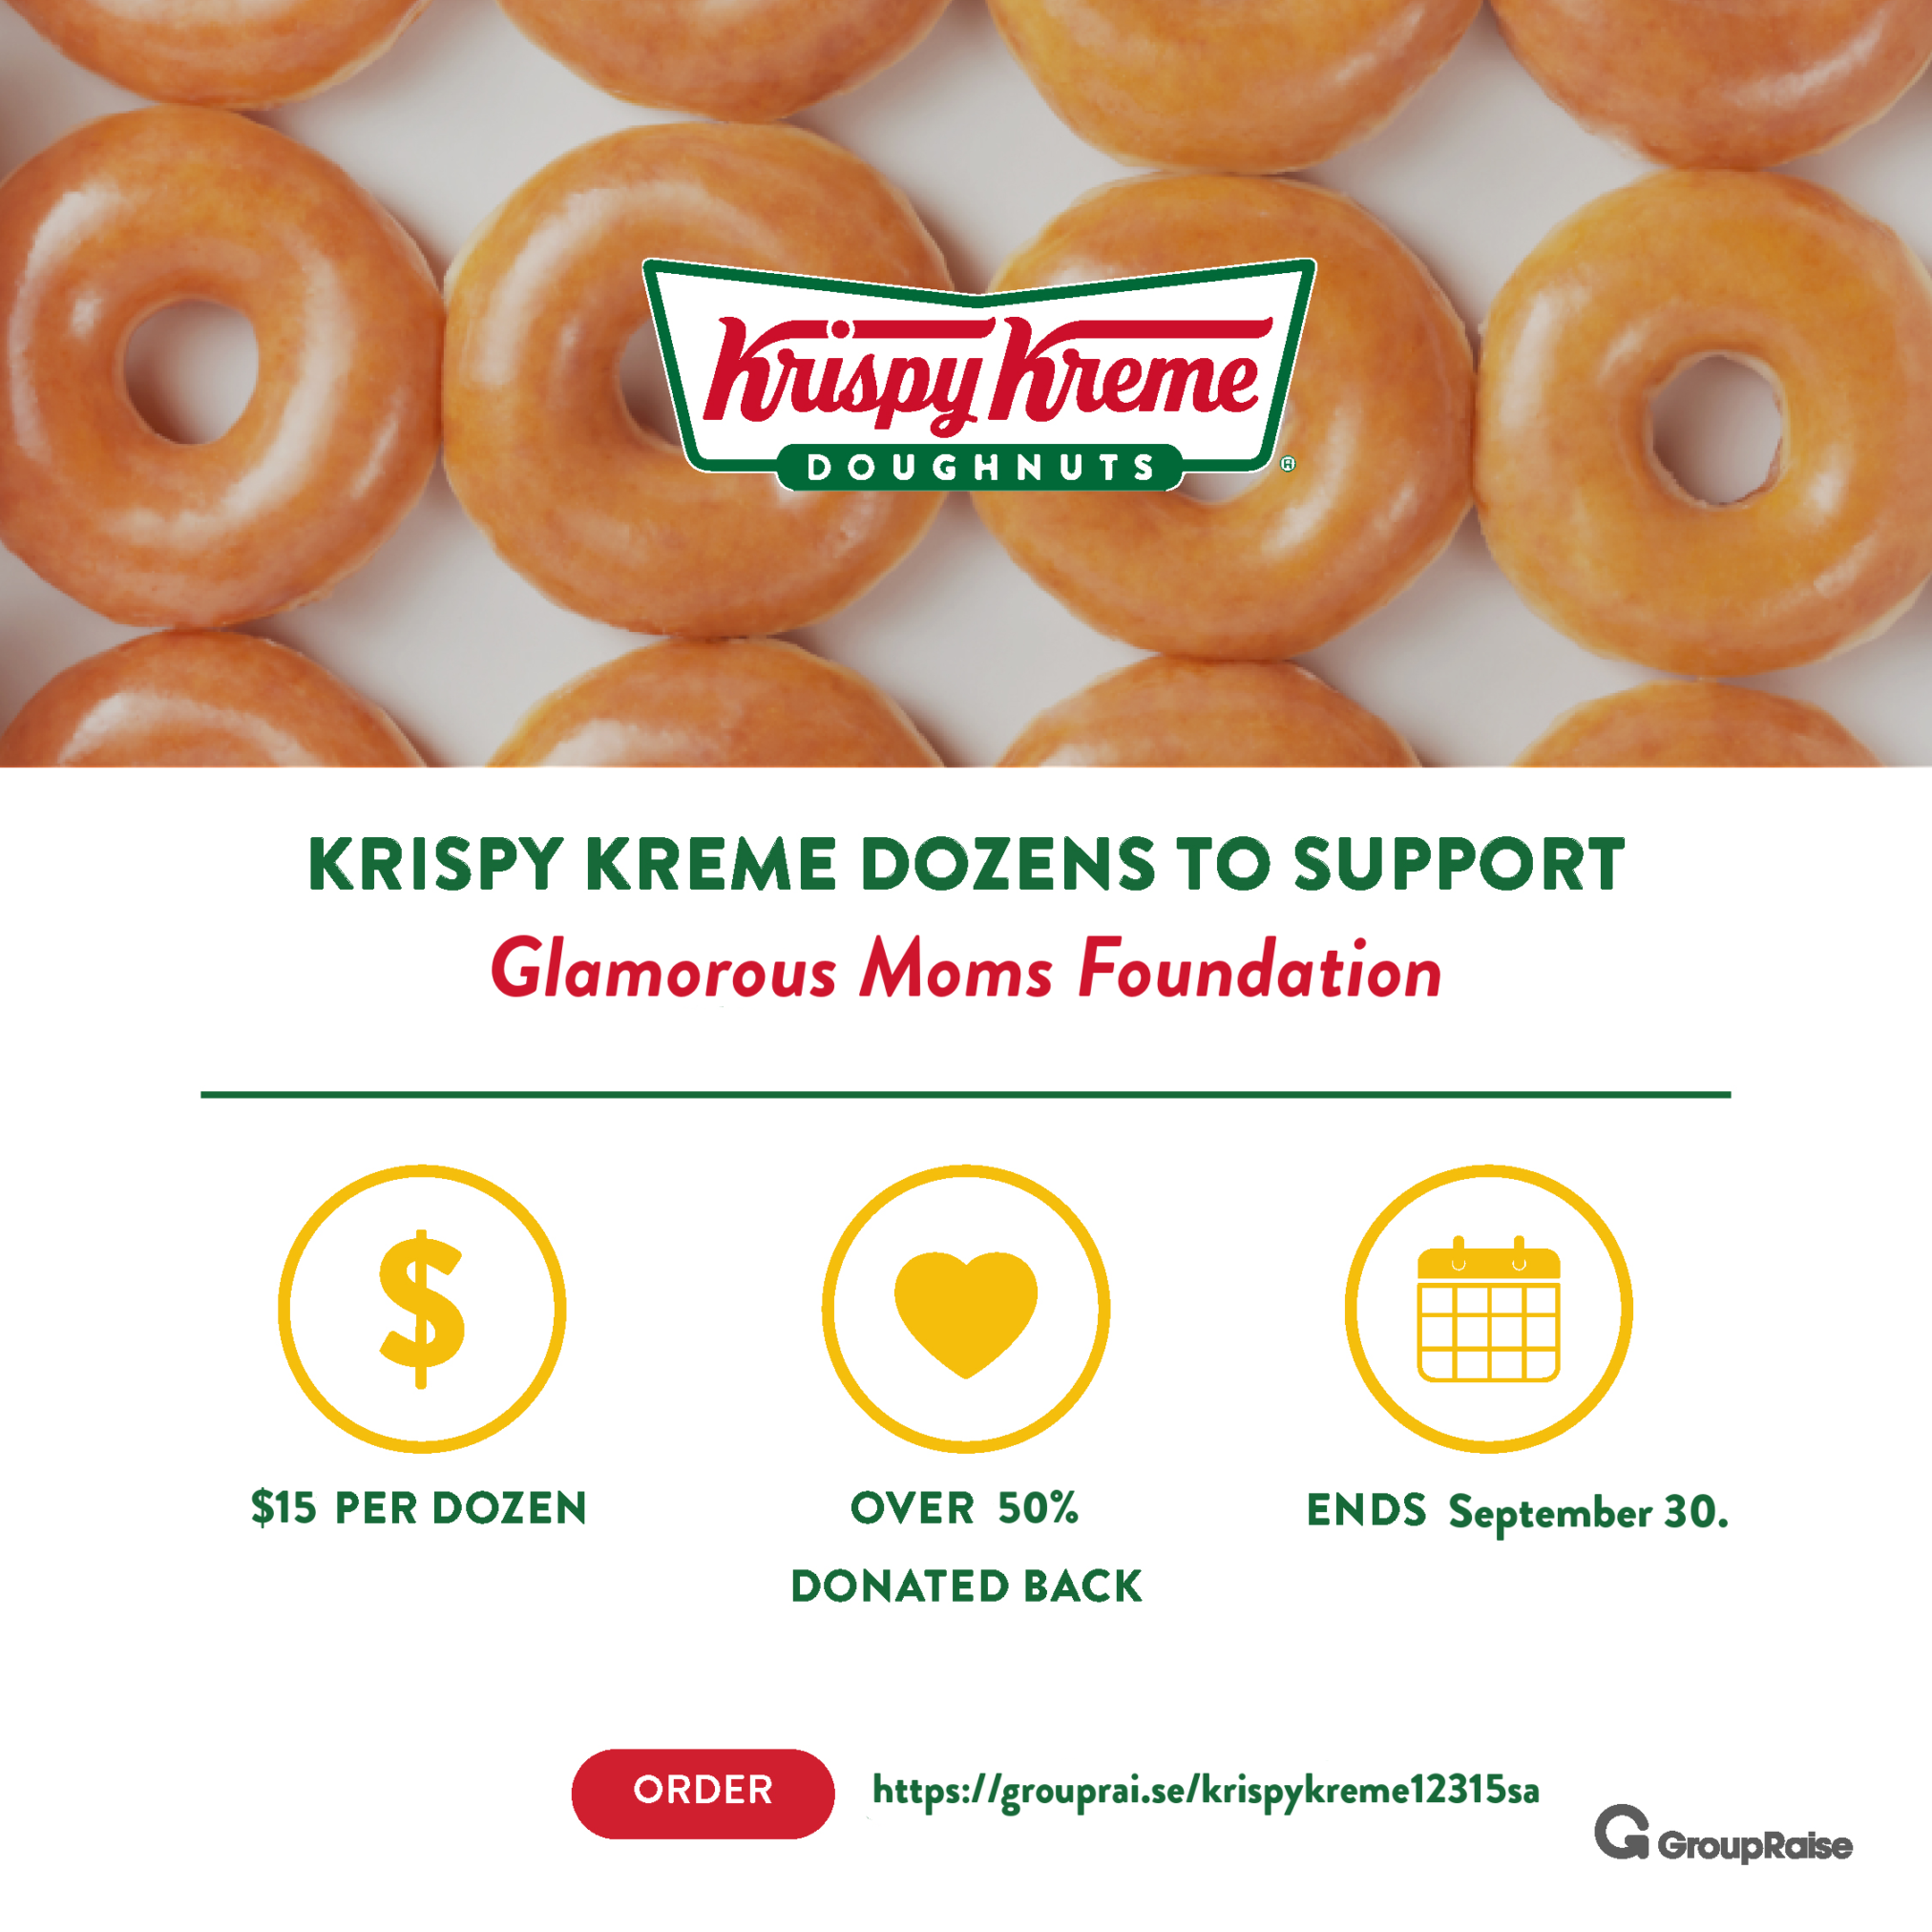 Shop Krispy Kreme to Support the Glamorous Moms Foundation